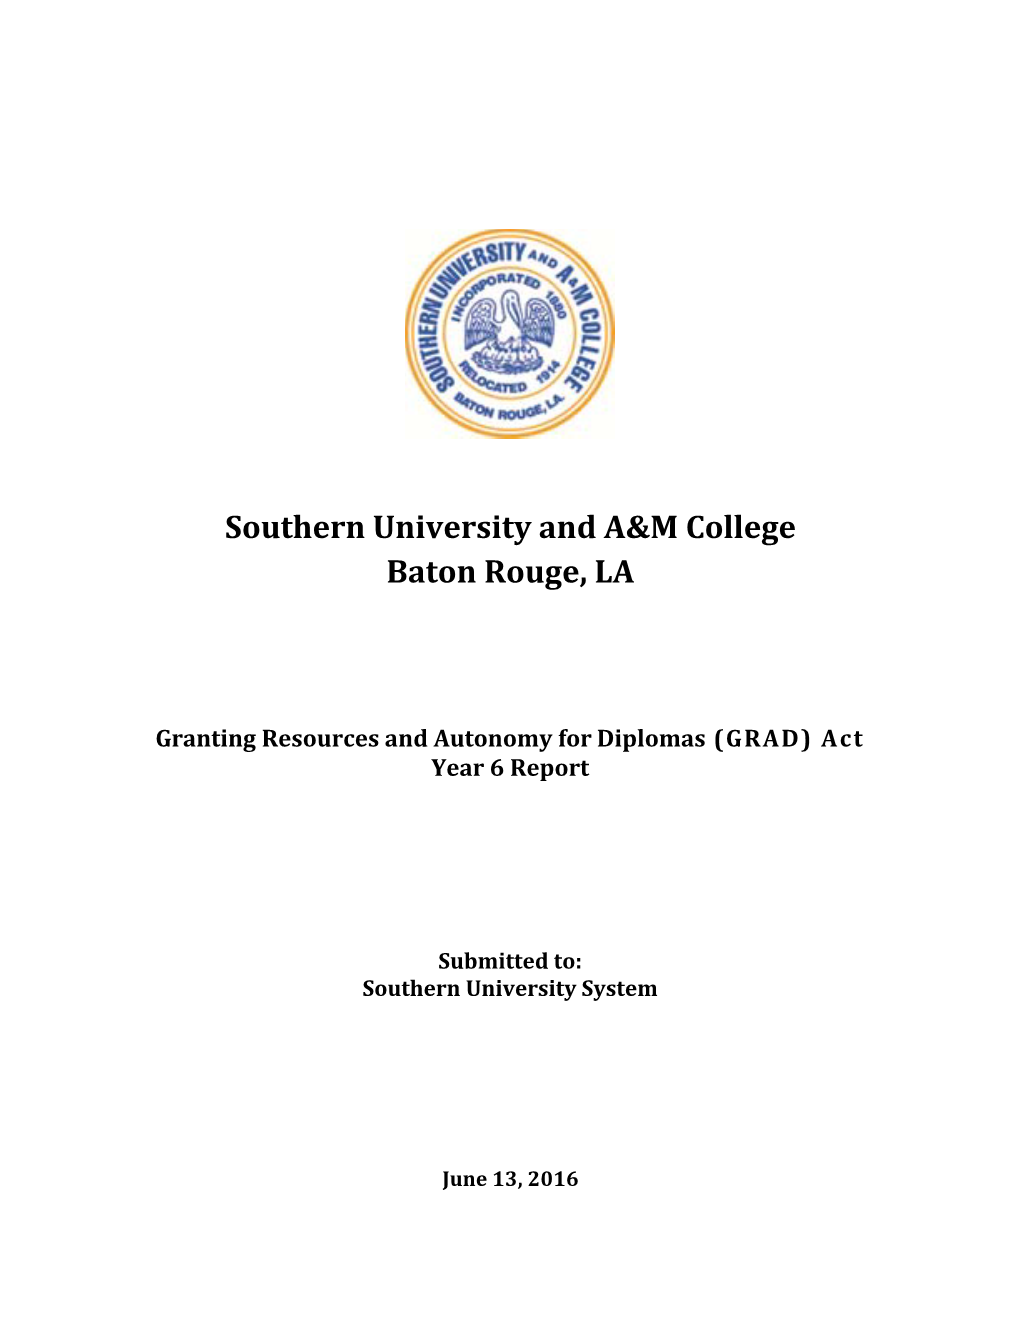 Southern University and A&M College Baton Rouge, LA